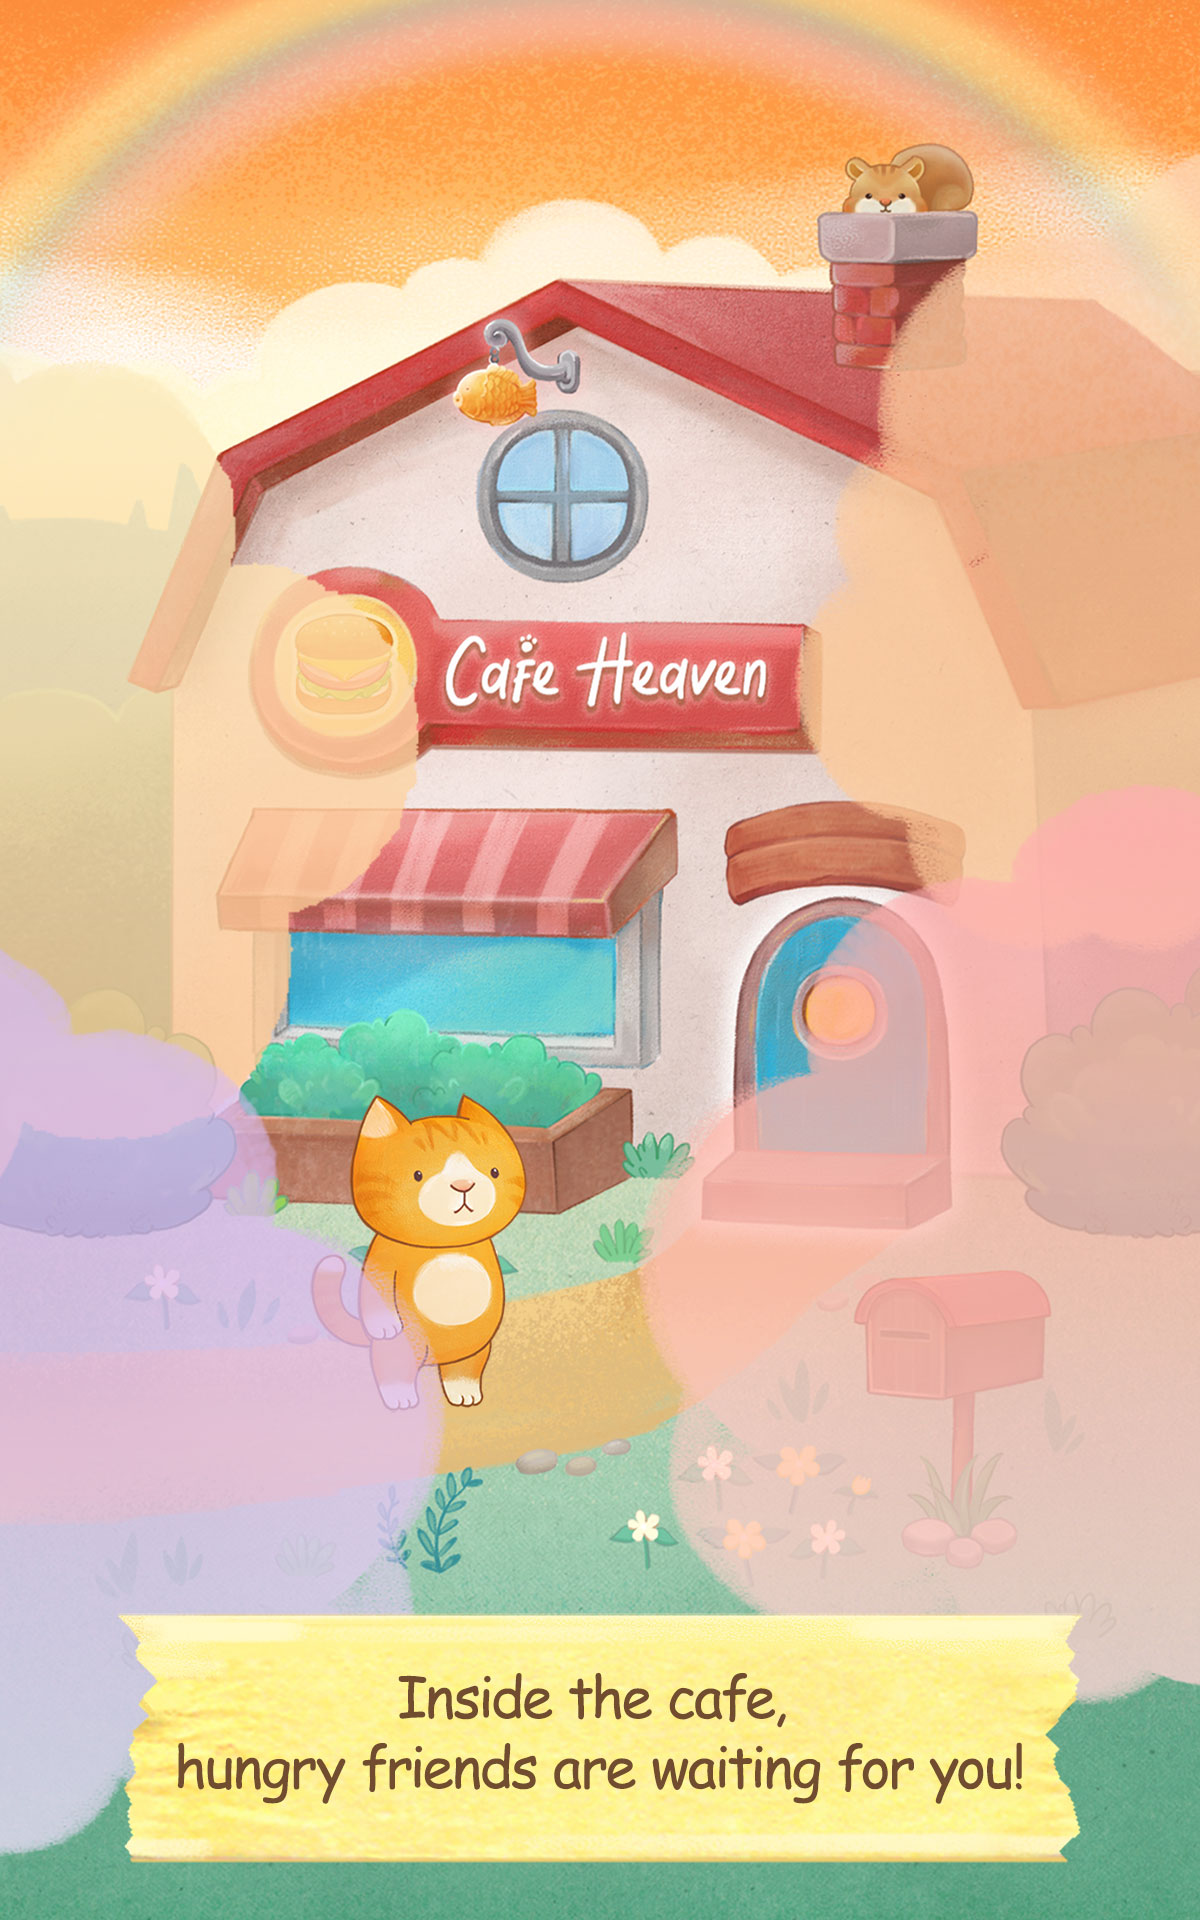 Descargar Cafe Heaven - Cat's Sandwich gratis para Android.